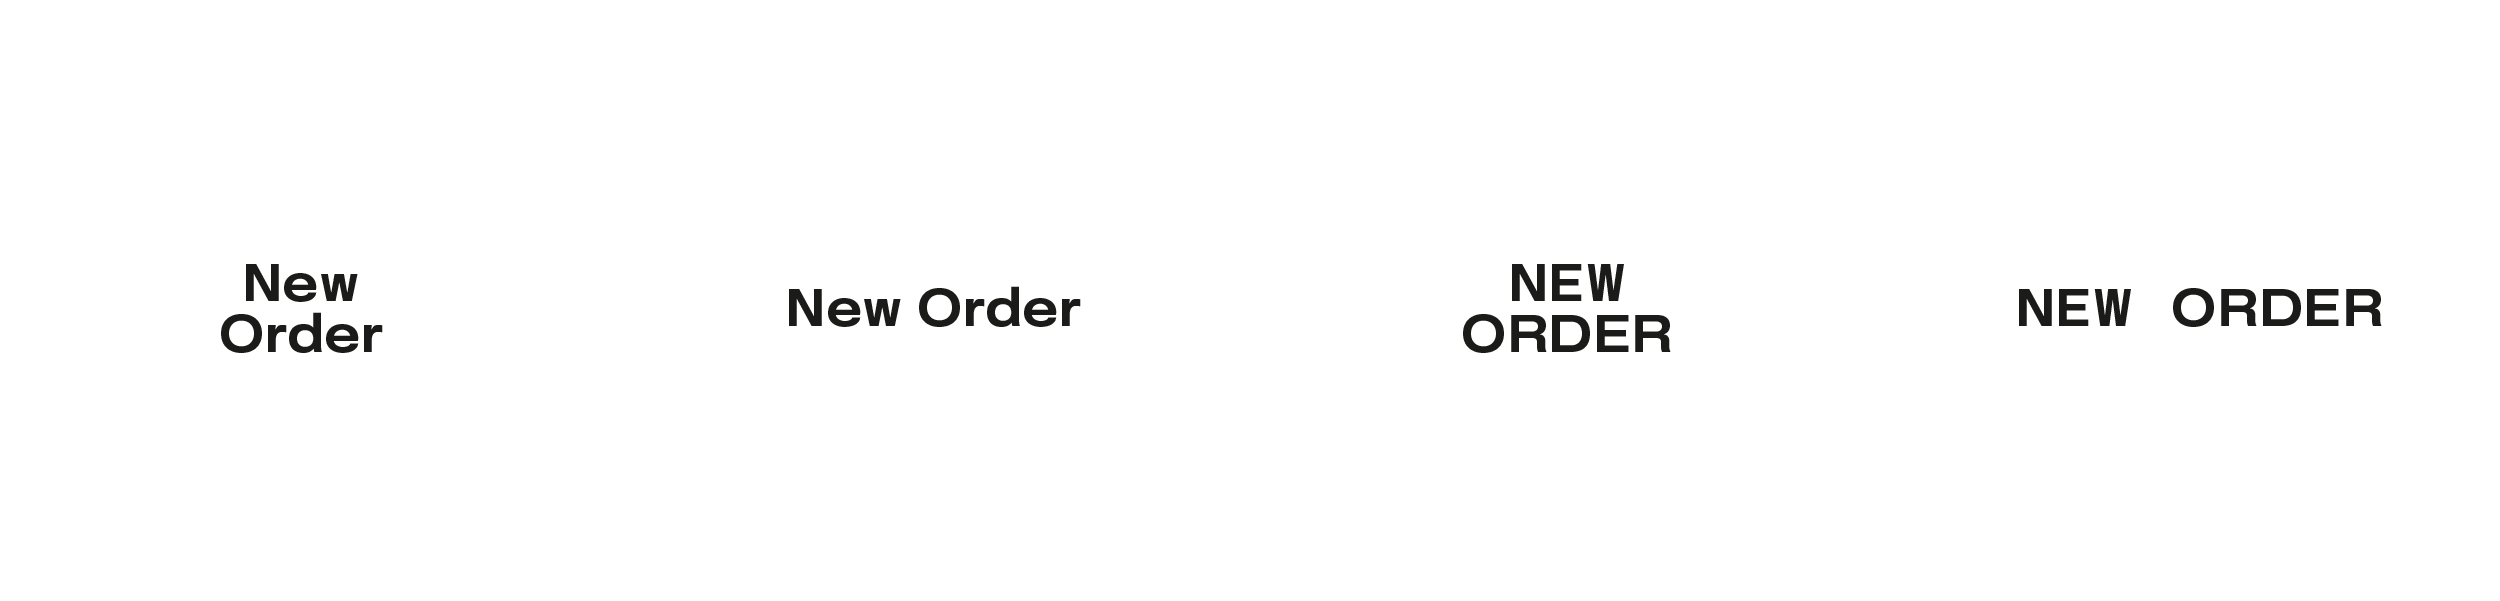 New Order Visual Identity designed by Tobias Heumann